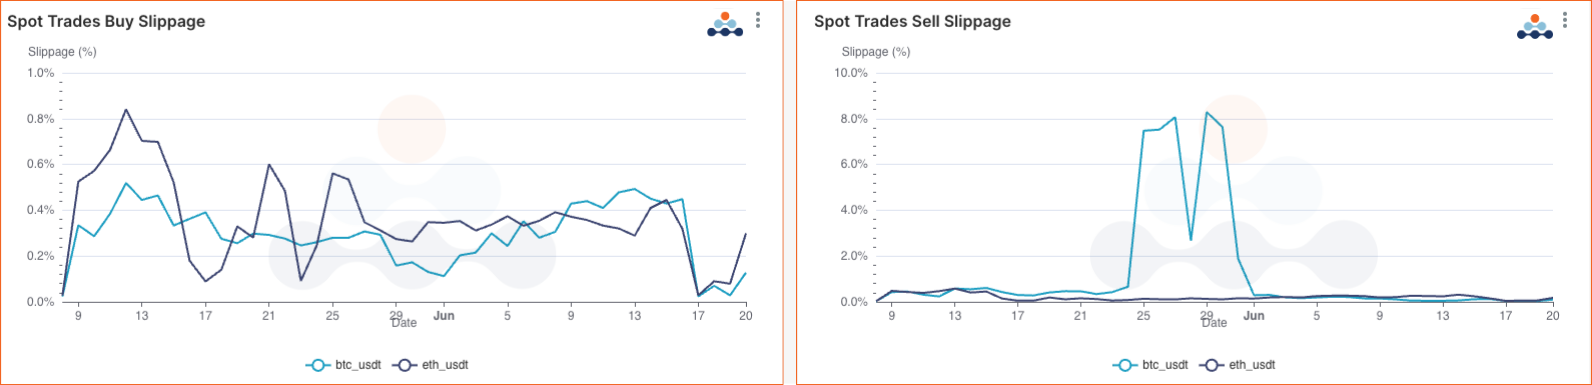 amberdata Spot trades buy slippage and spot trades sell slippage